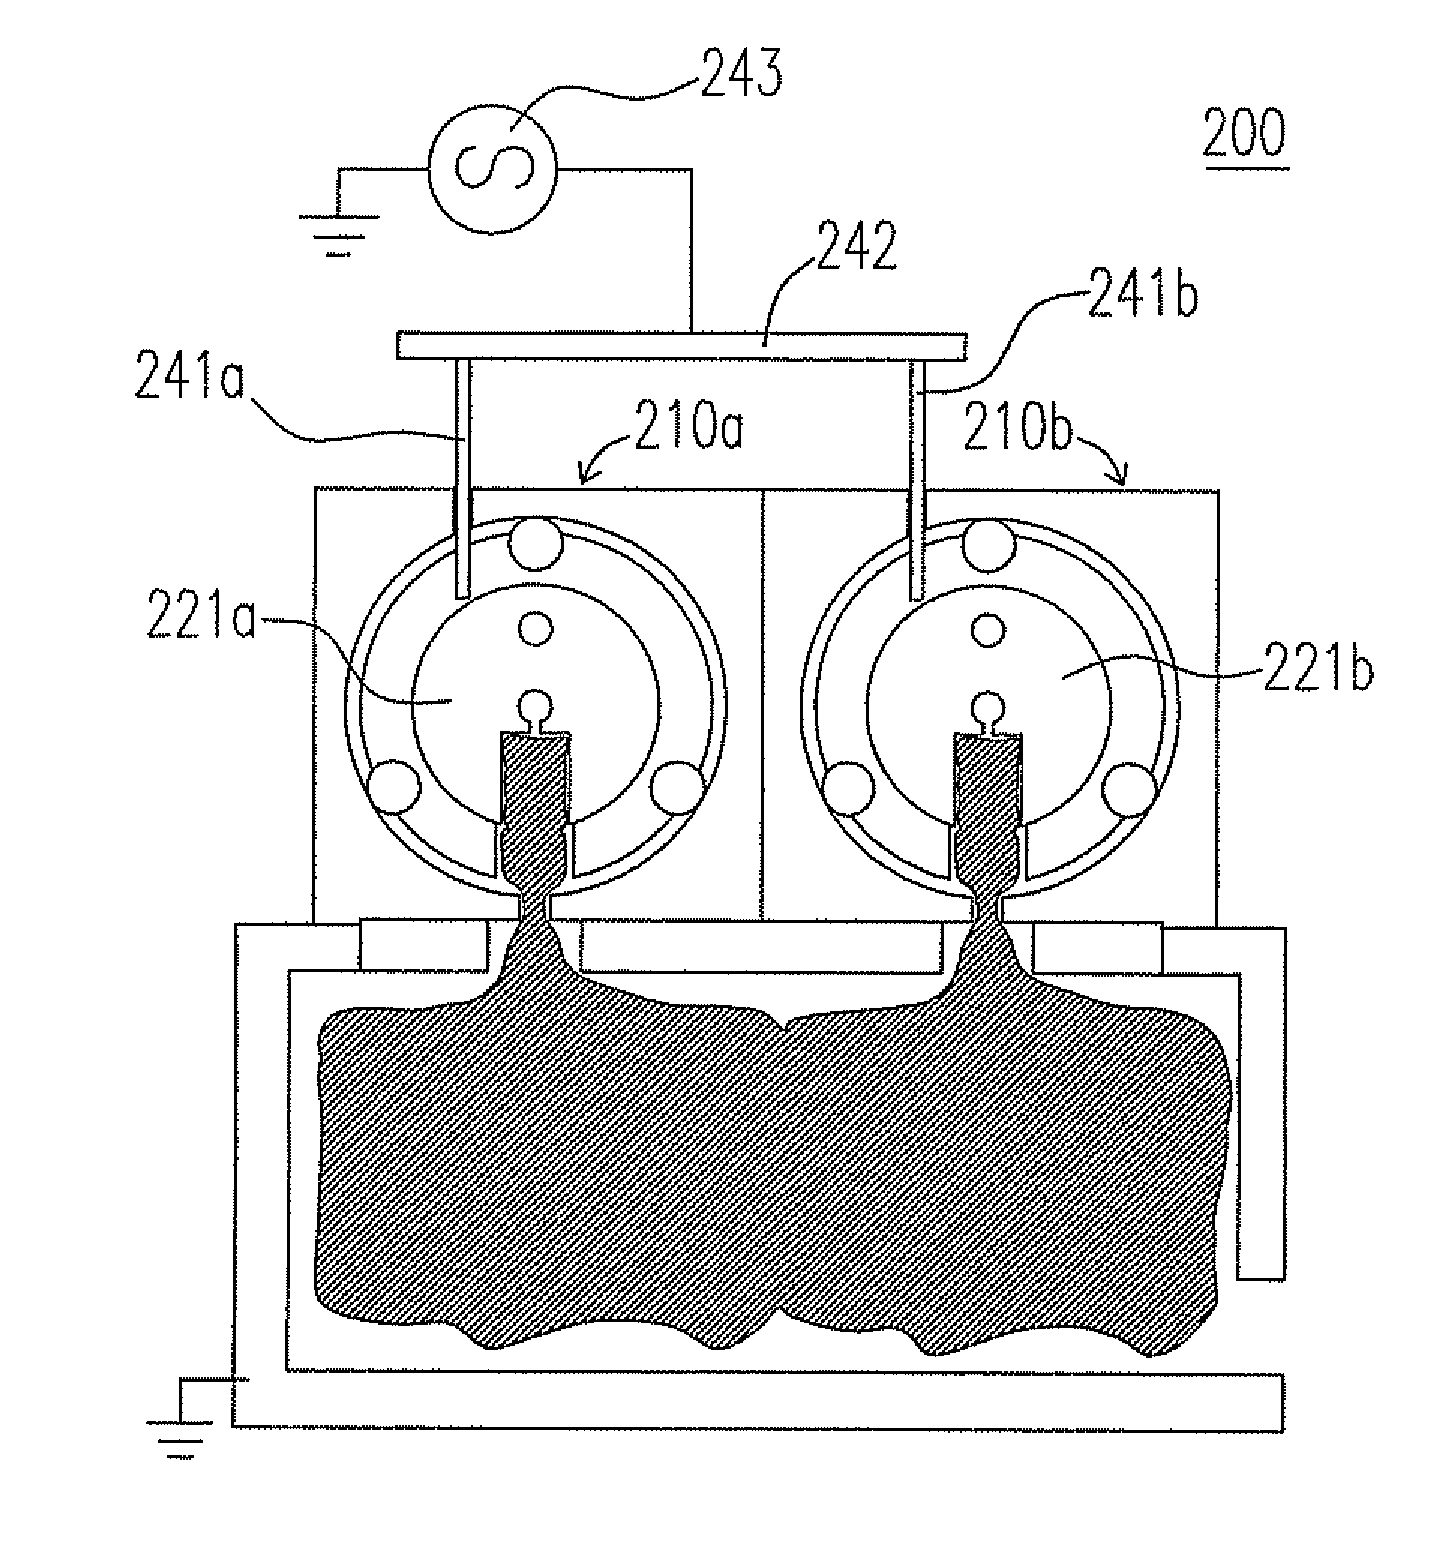 Cathode discharge apparatus